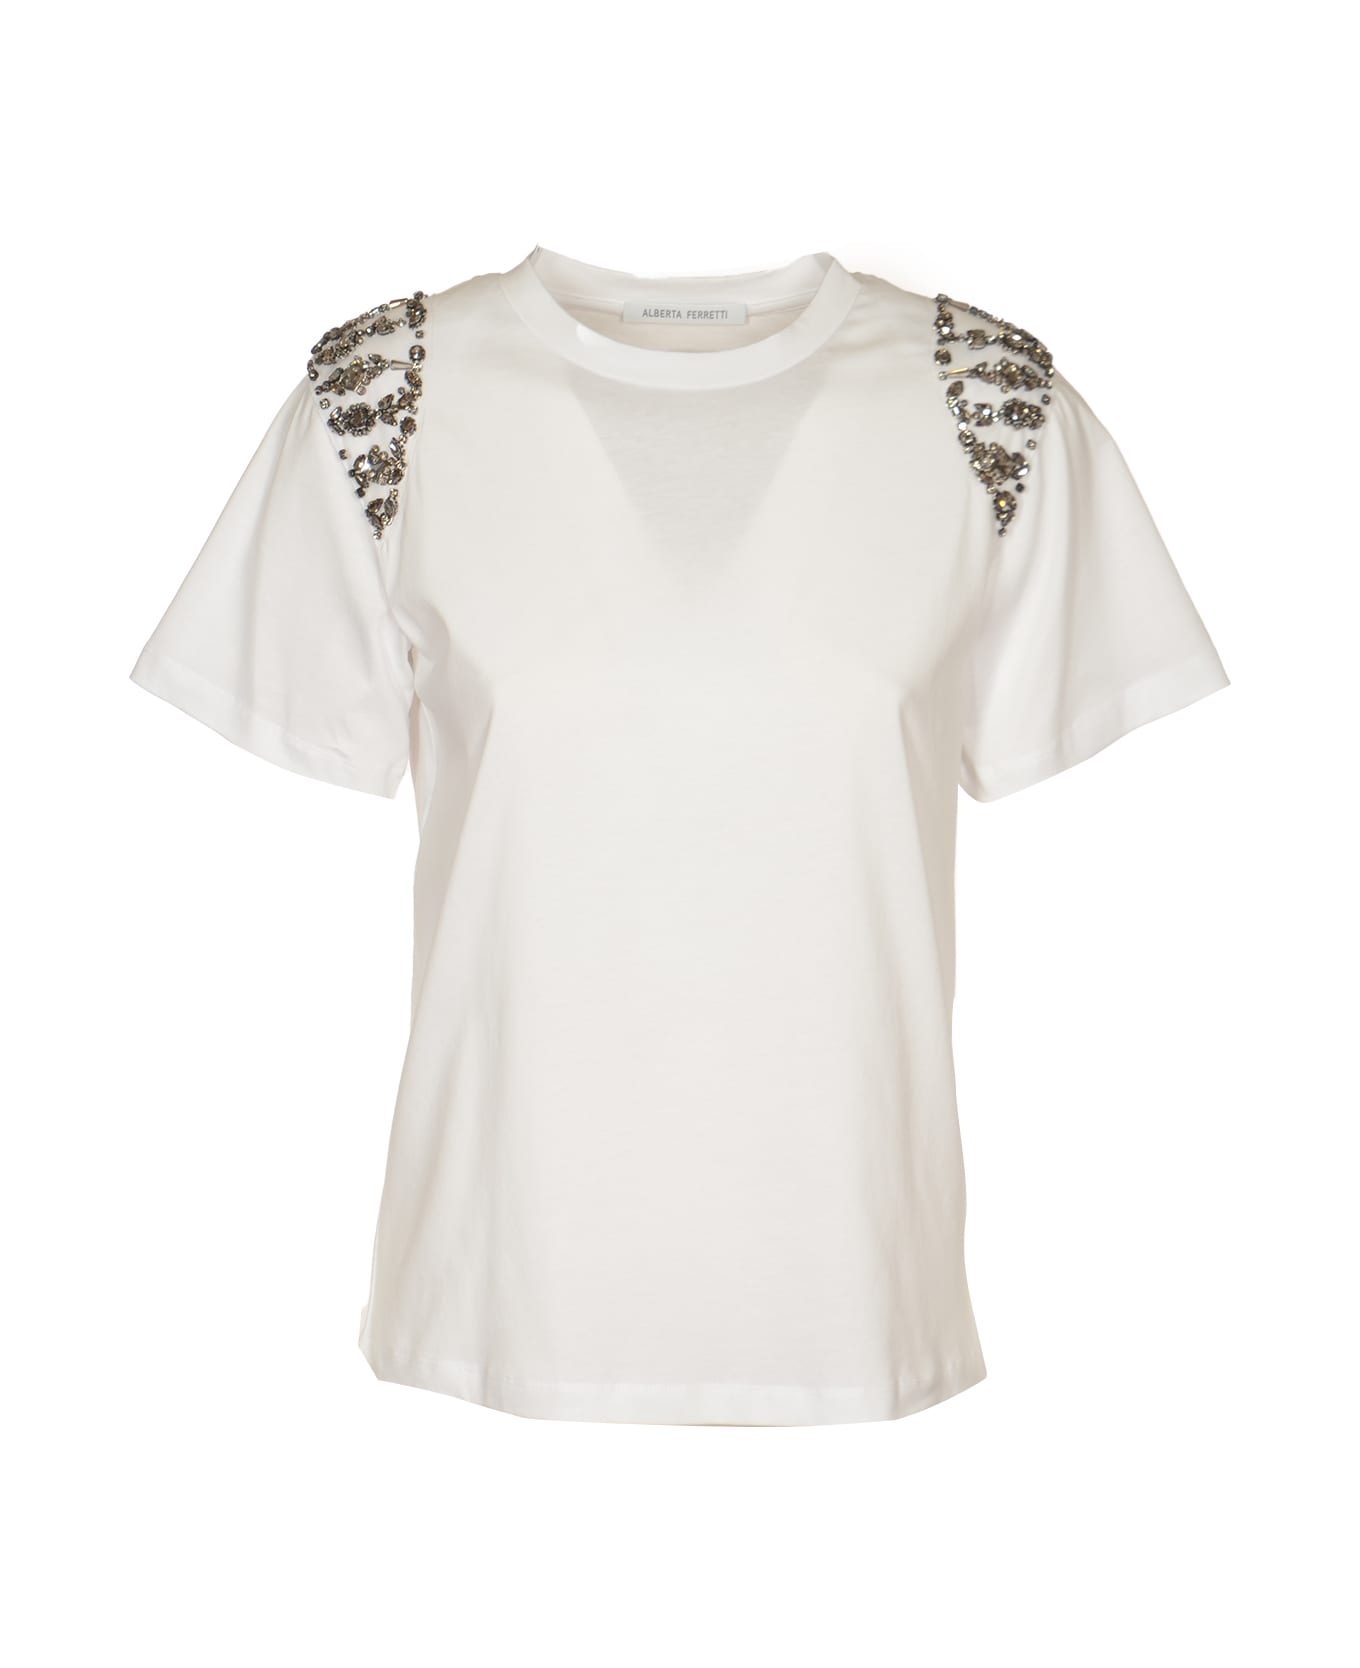 Alberta Ferretti Rhinestone Embellished Round Neck T-shirt